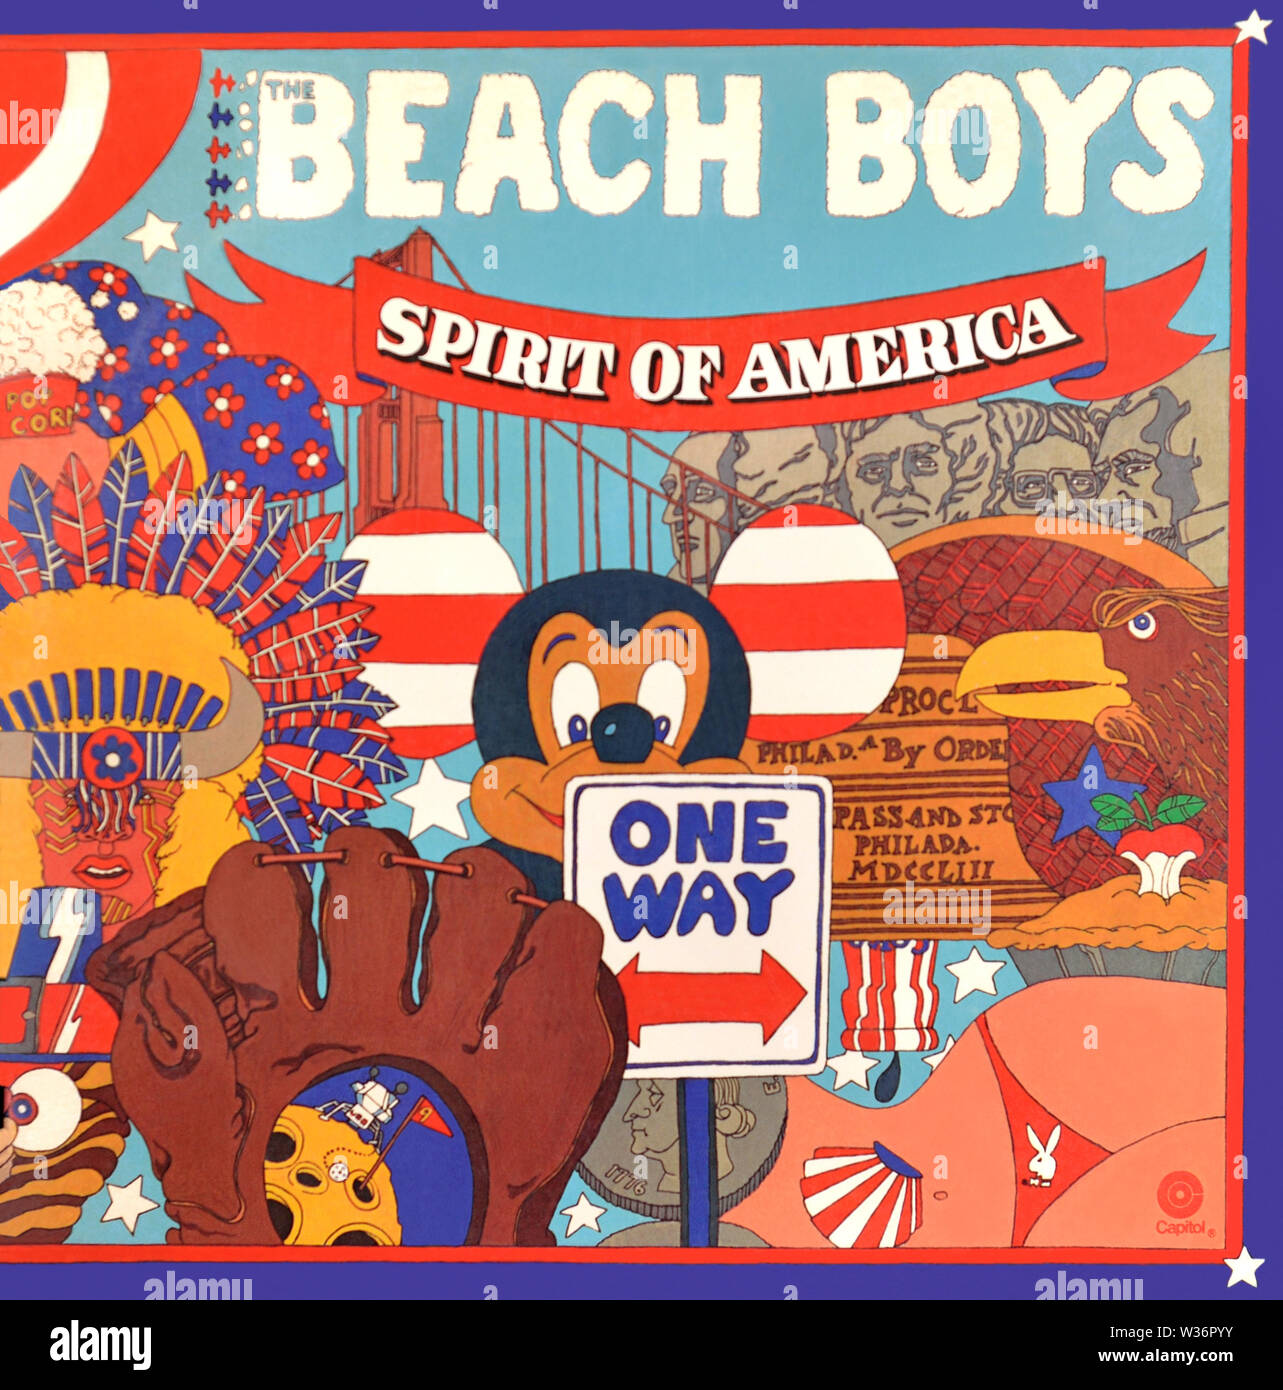 The Beach Boys - original Vinyl Album Cover - Spirit of America - 1975 Stockfoto